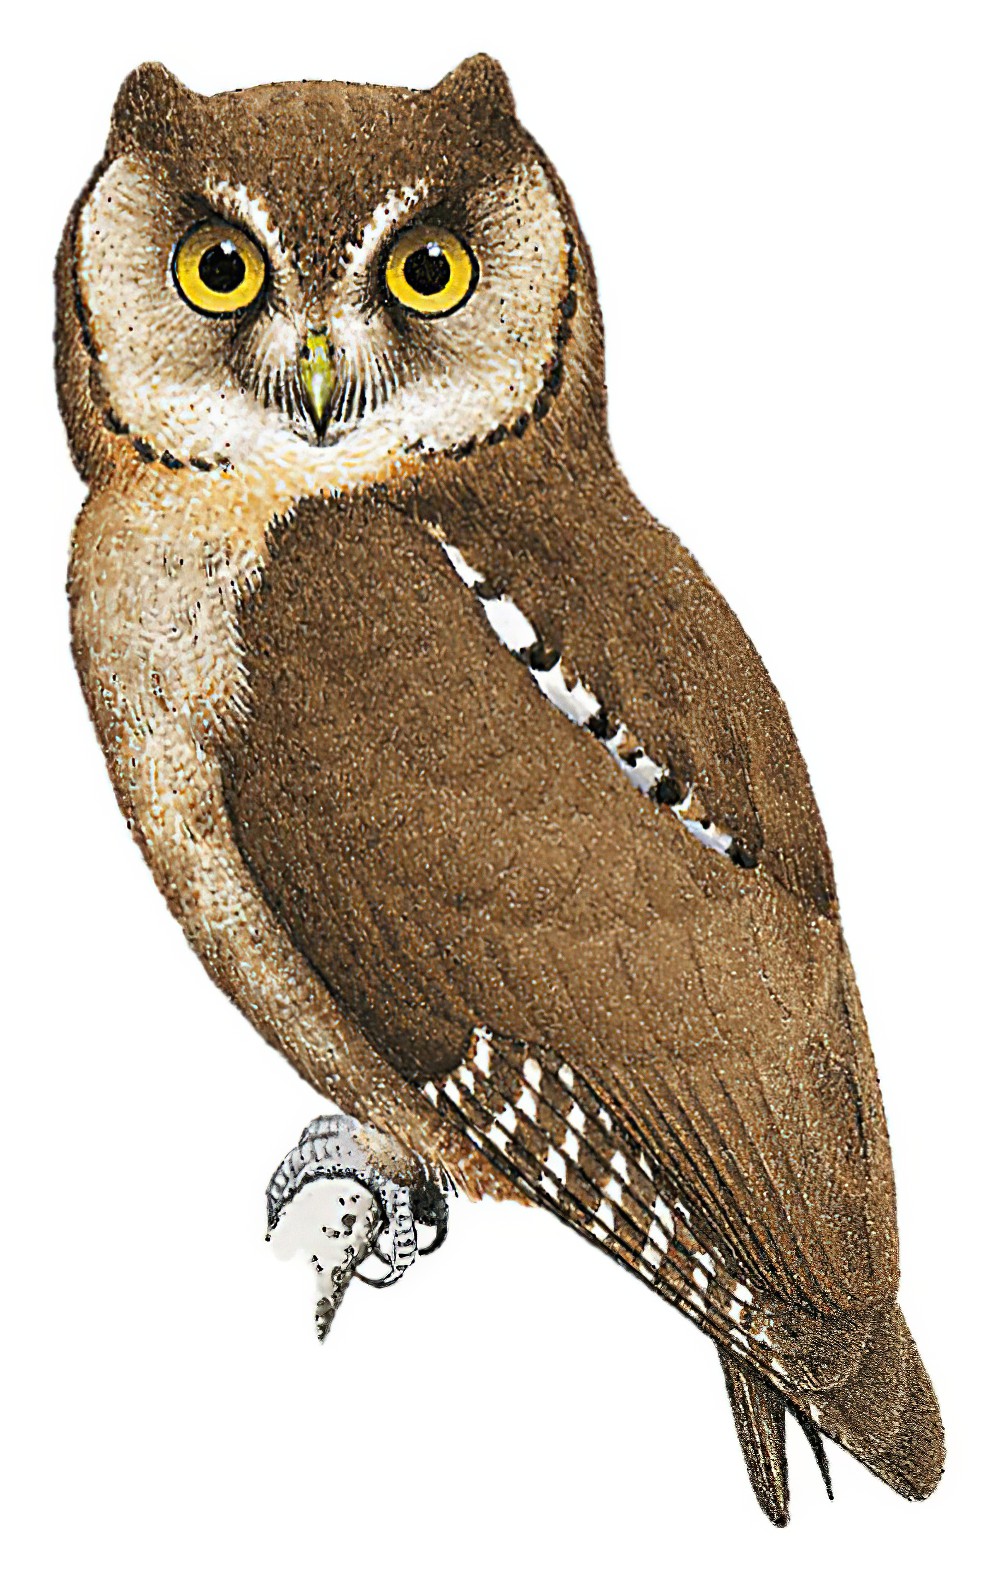 Pemba Scops-Owl / Otus pembaensis